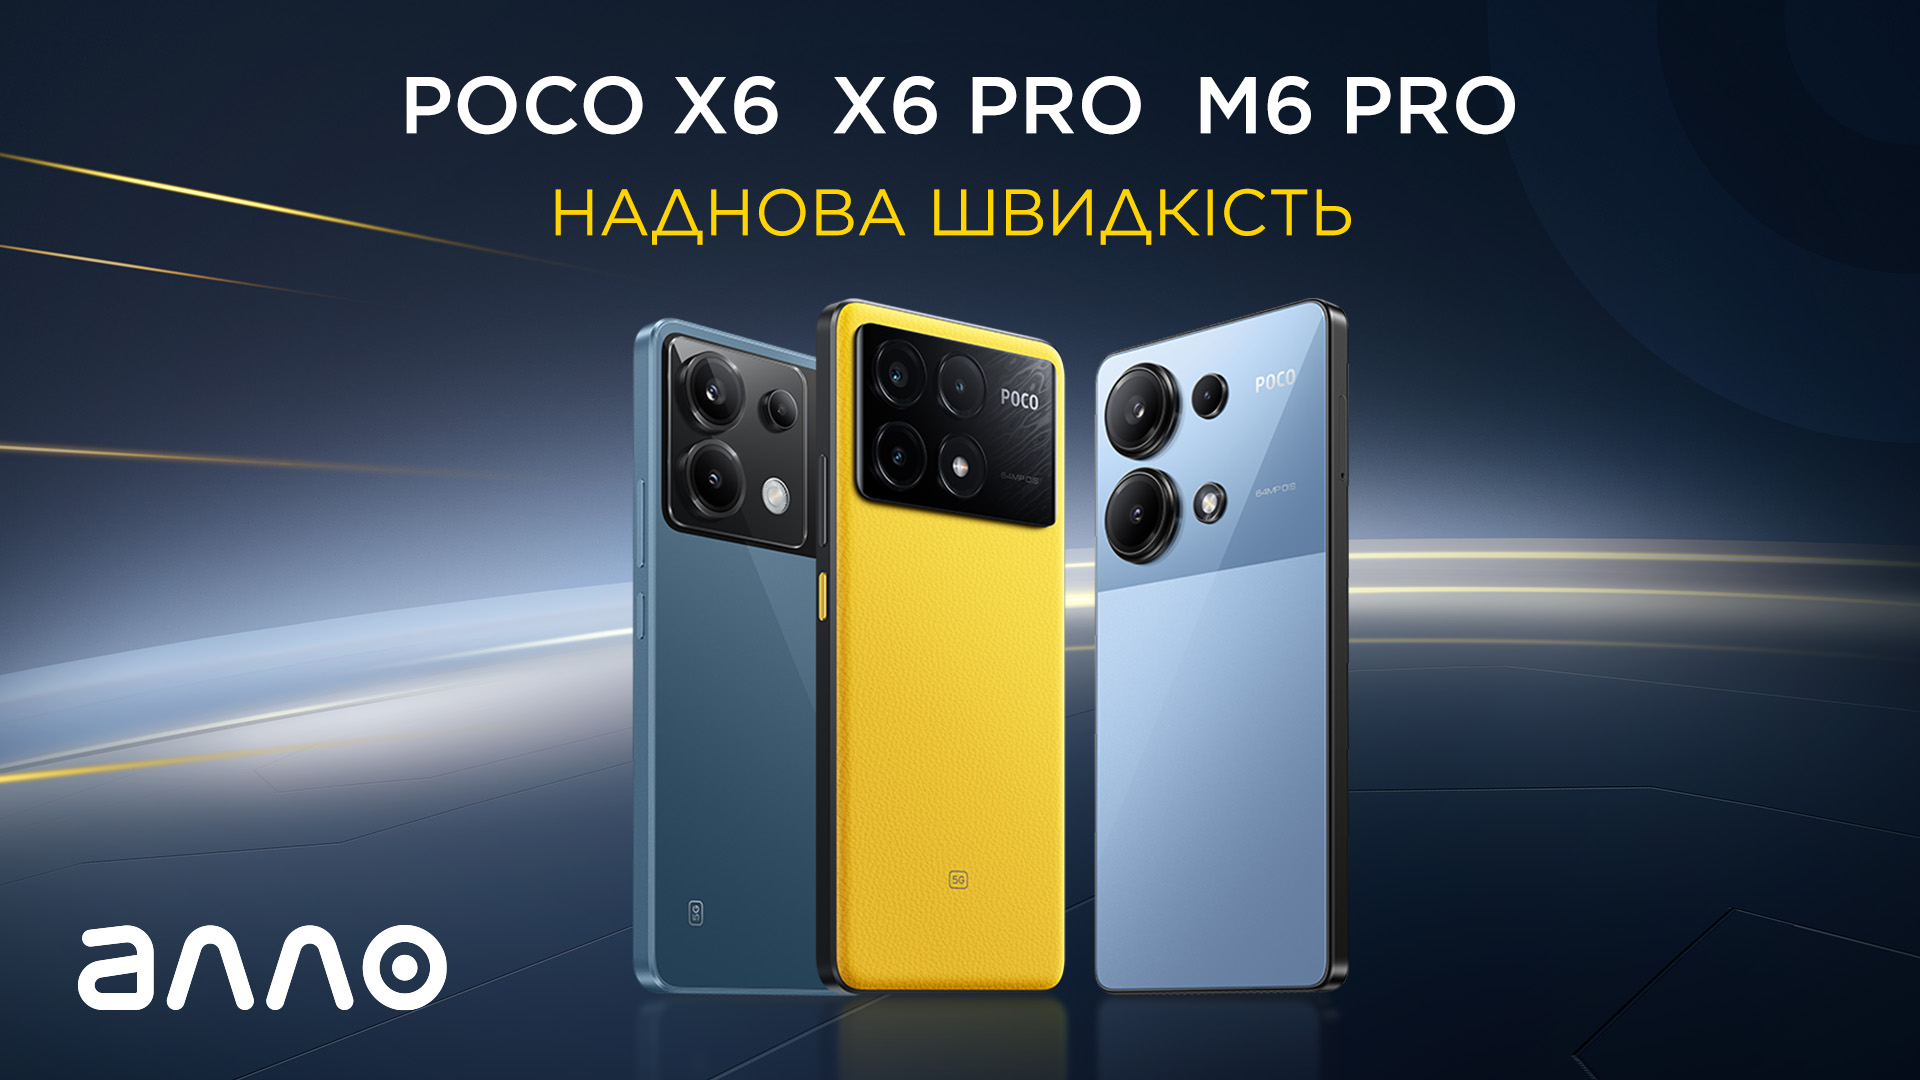 Від 9499 грн: смартфони POCO M6 Pro, POCO X6 5G та POCO X6 Pro 5G приїхали в Україну